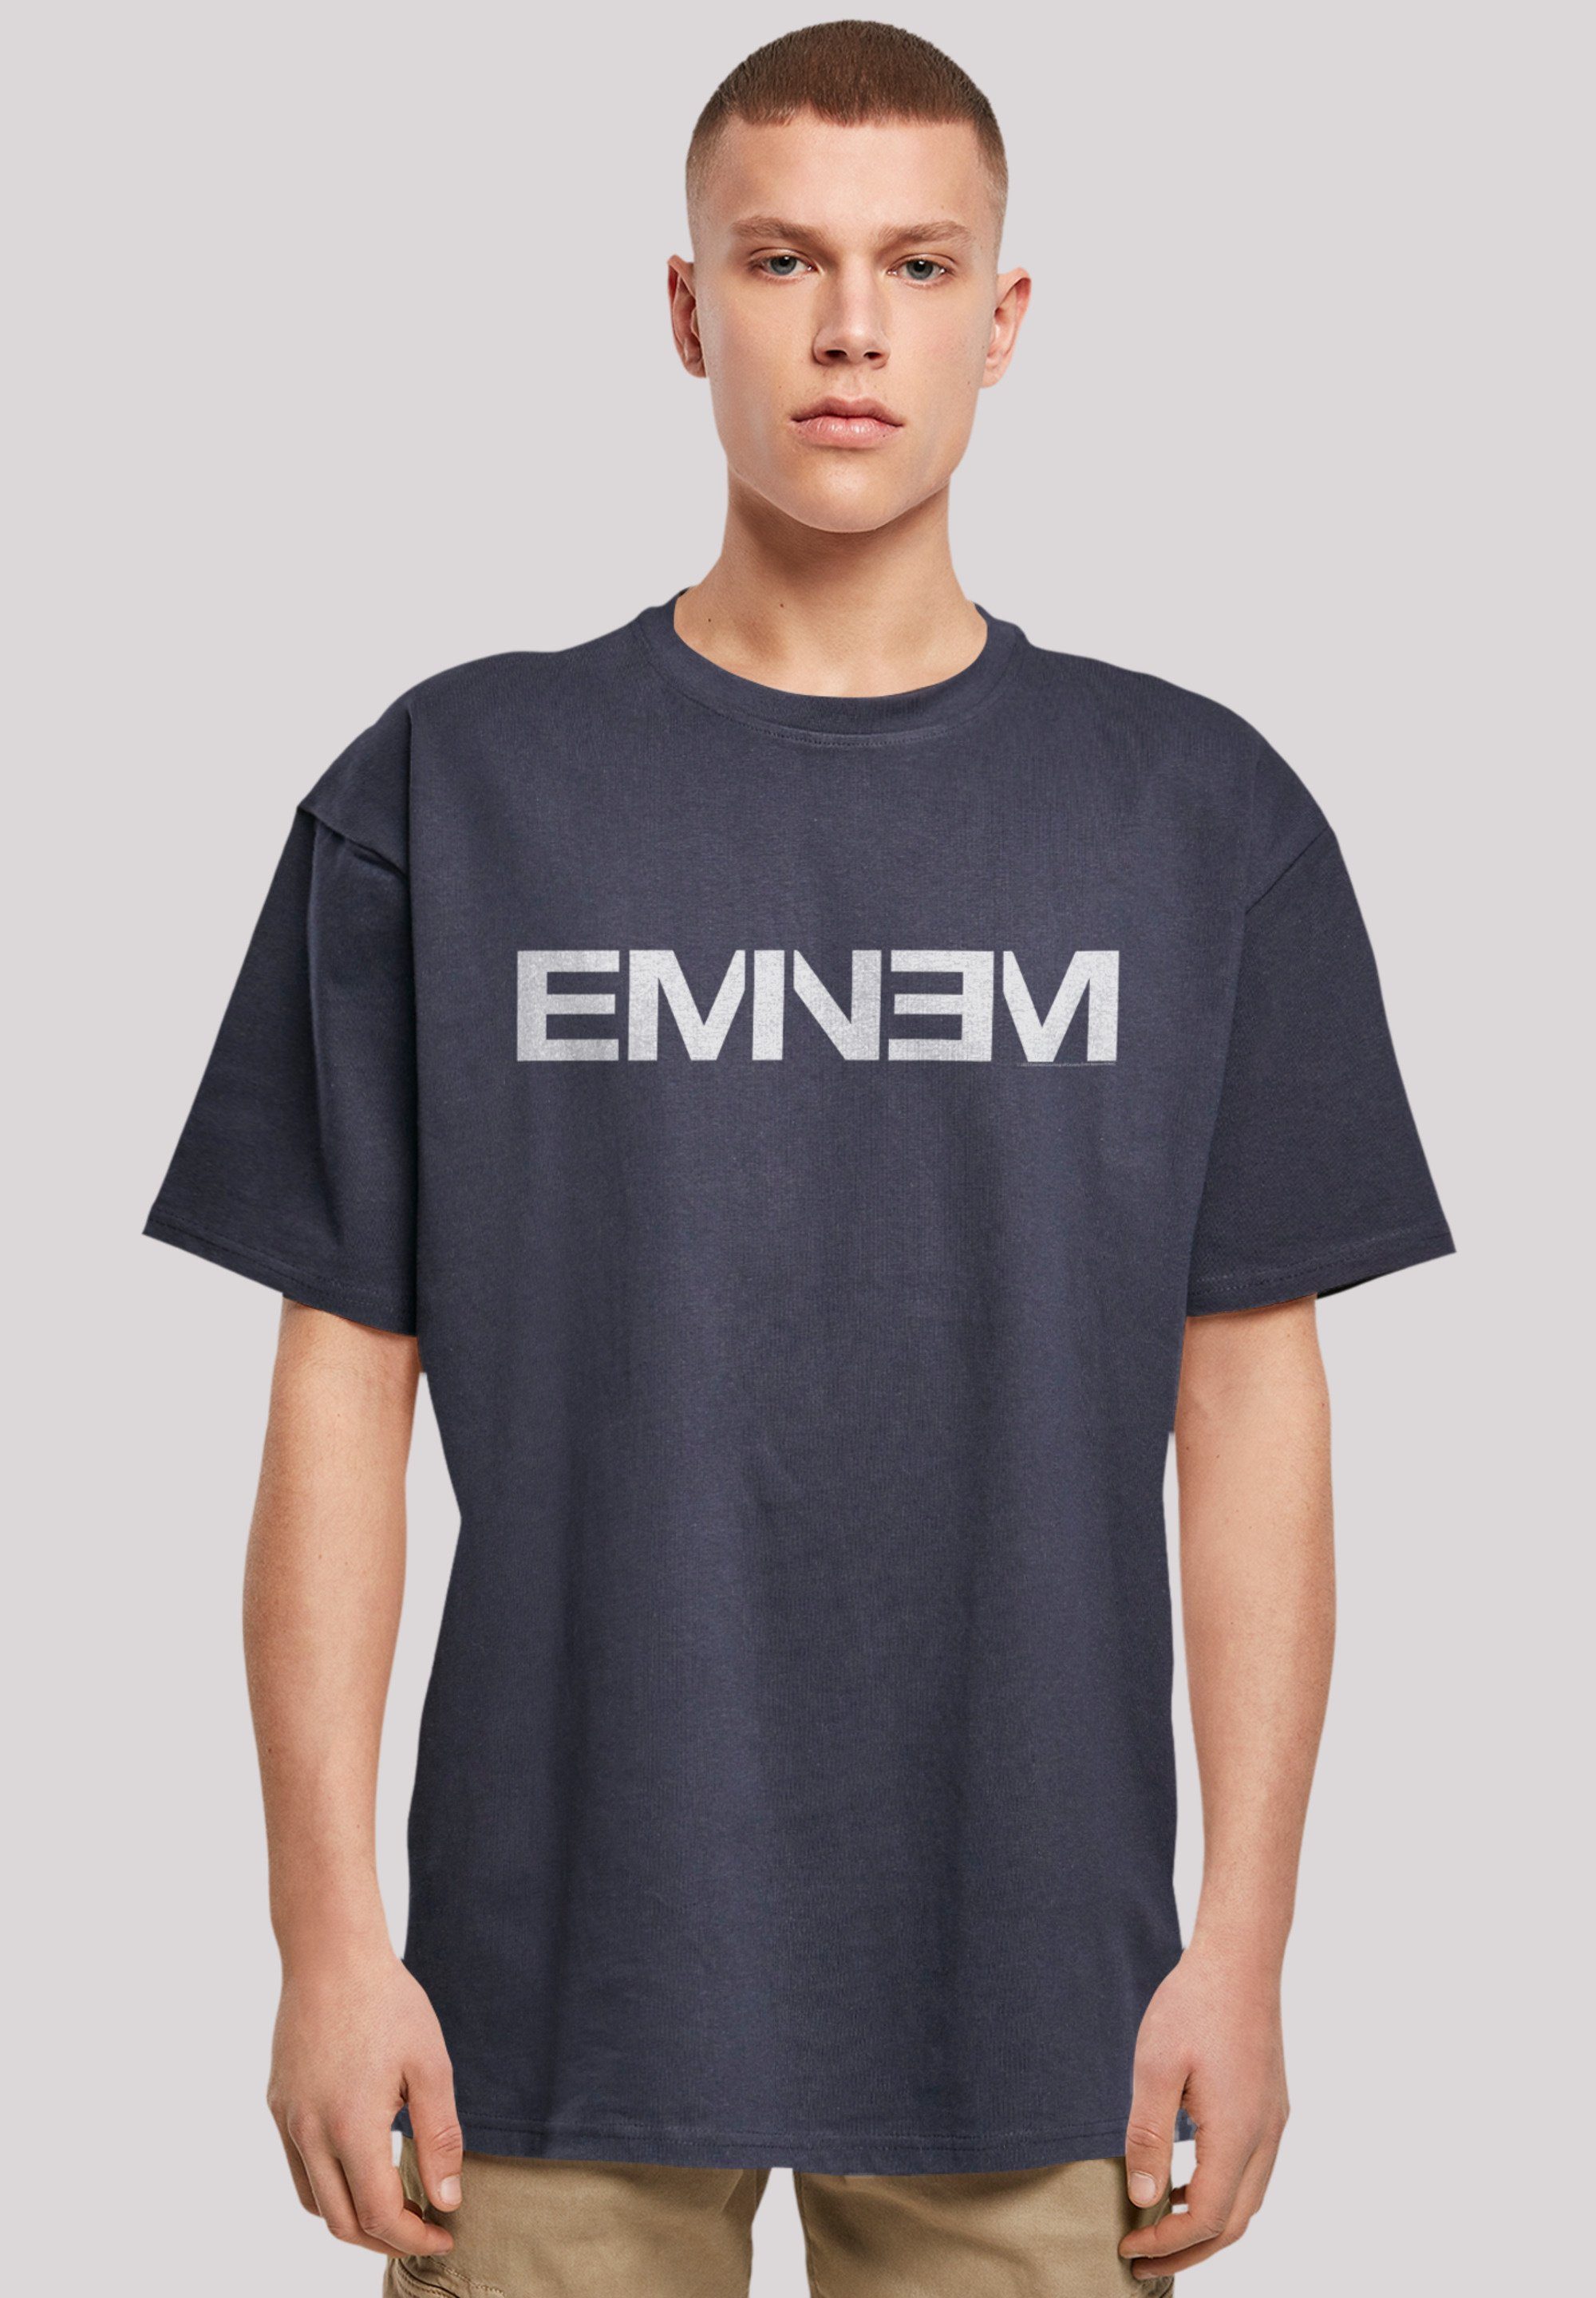 F4NT4STIC T-Shirt Eminem Hip Hop Rap Music Premium Qualität, Musik navy